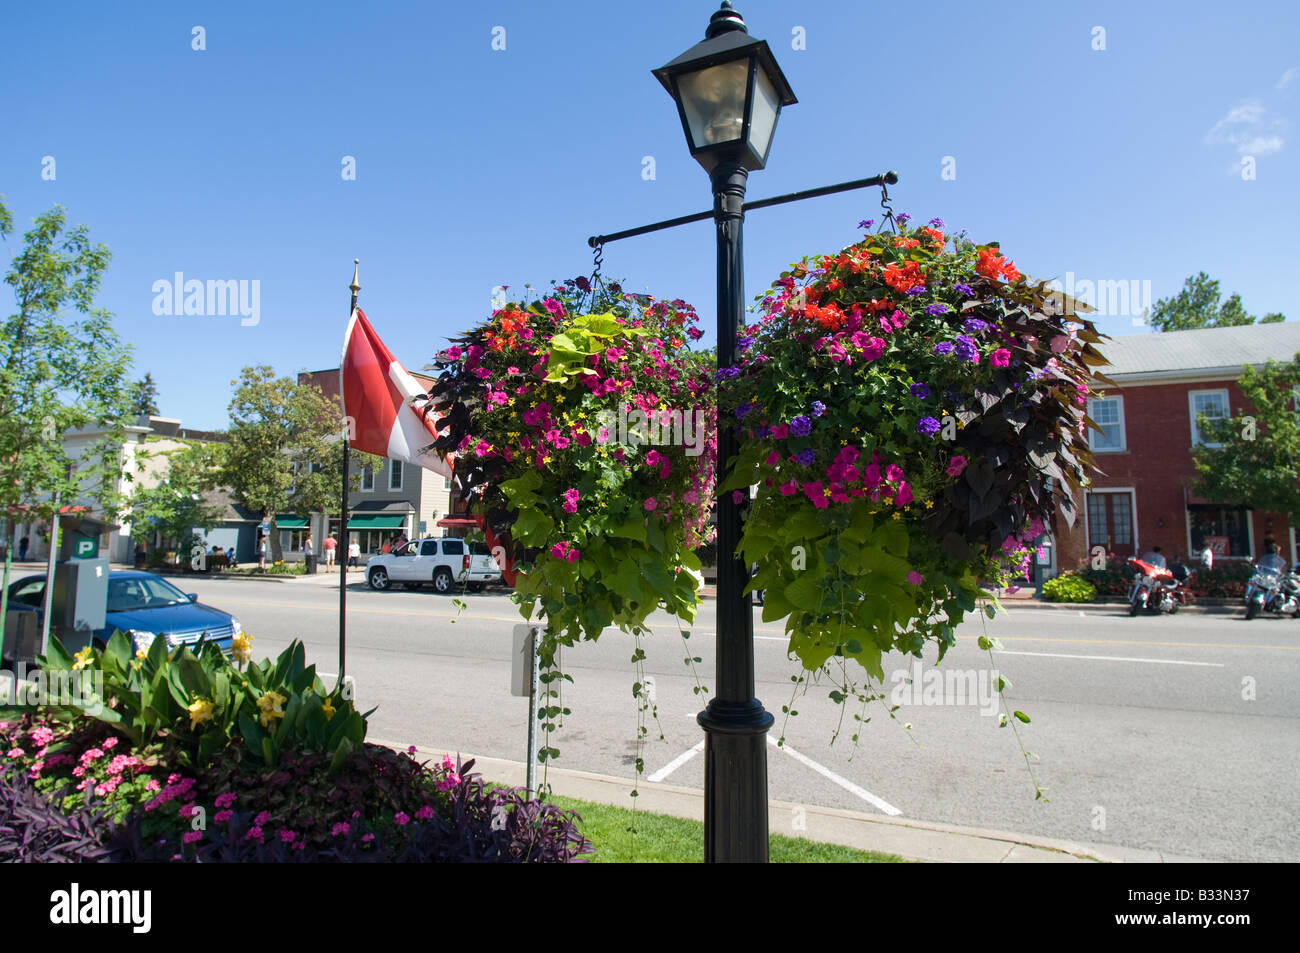 Üppige hängende Blumenkörbe schmücken diese Laterne in Niagara on the Lake Ontario, Kanada. Stockfoto